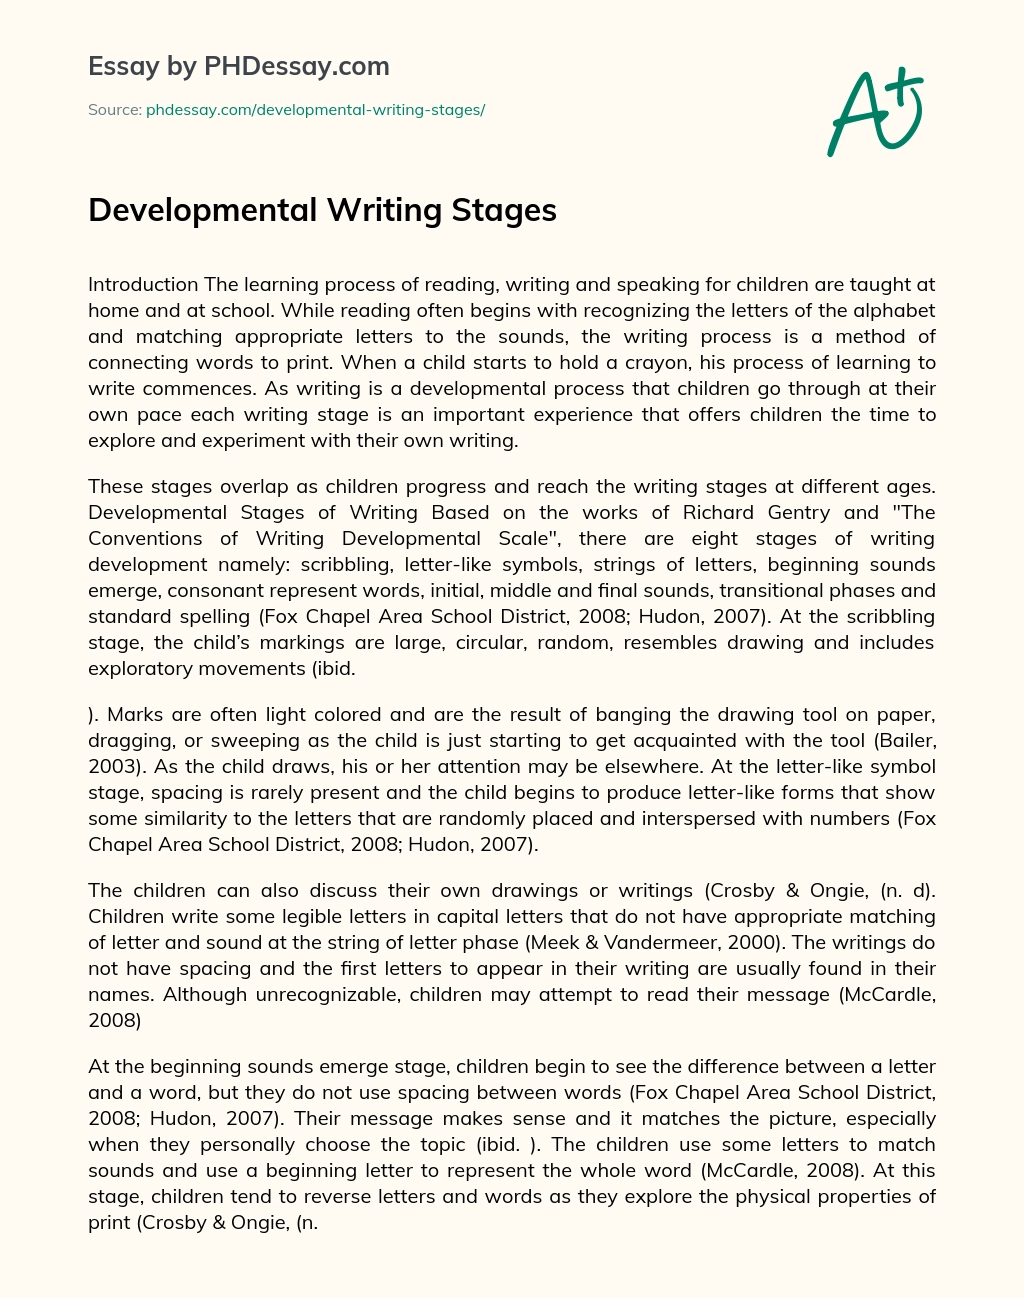 Developmental Writing Stages essay